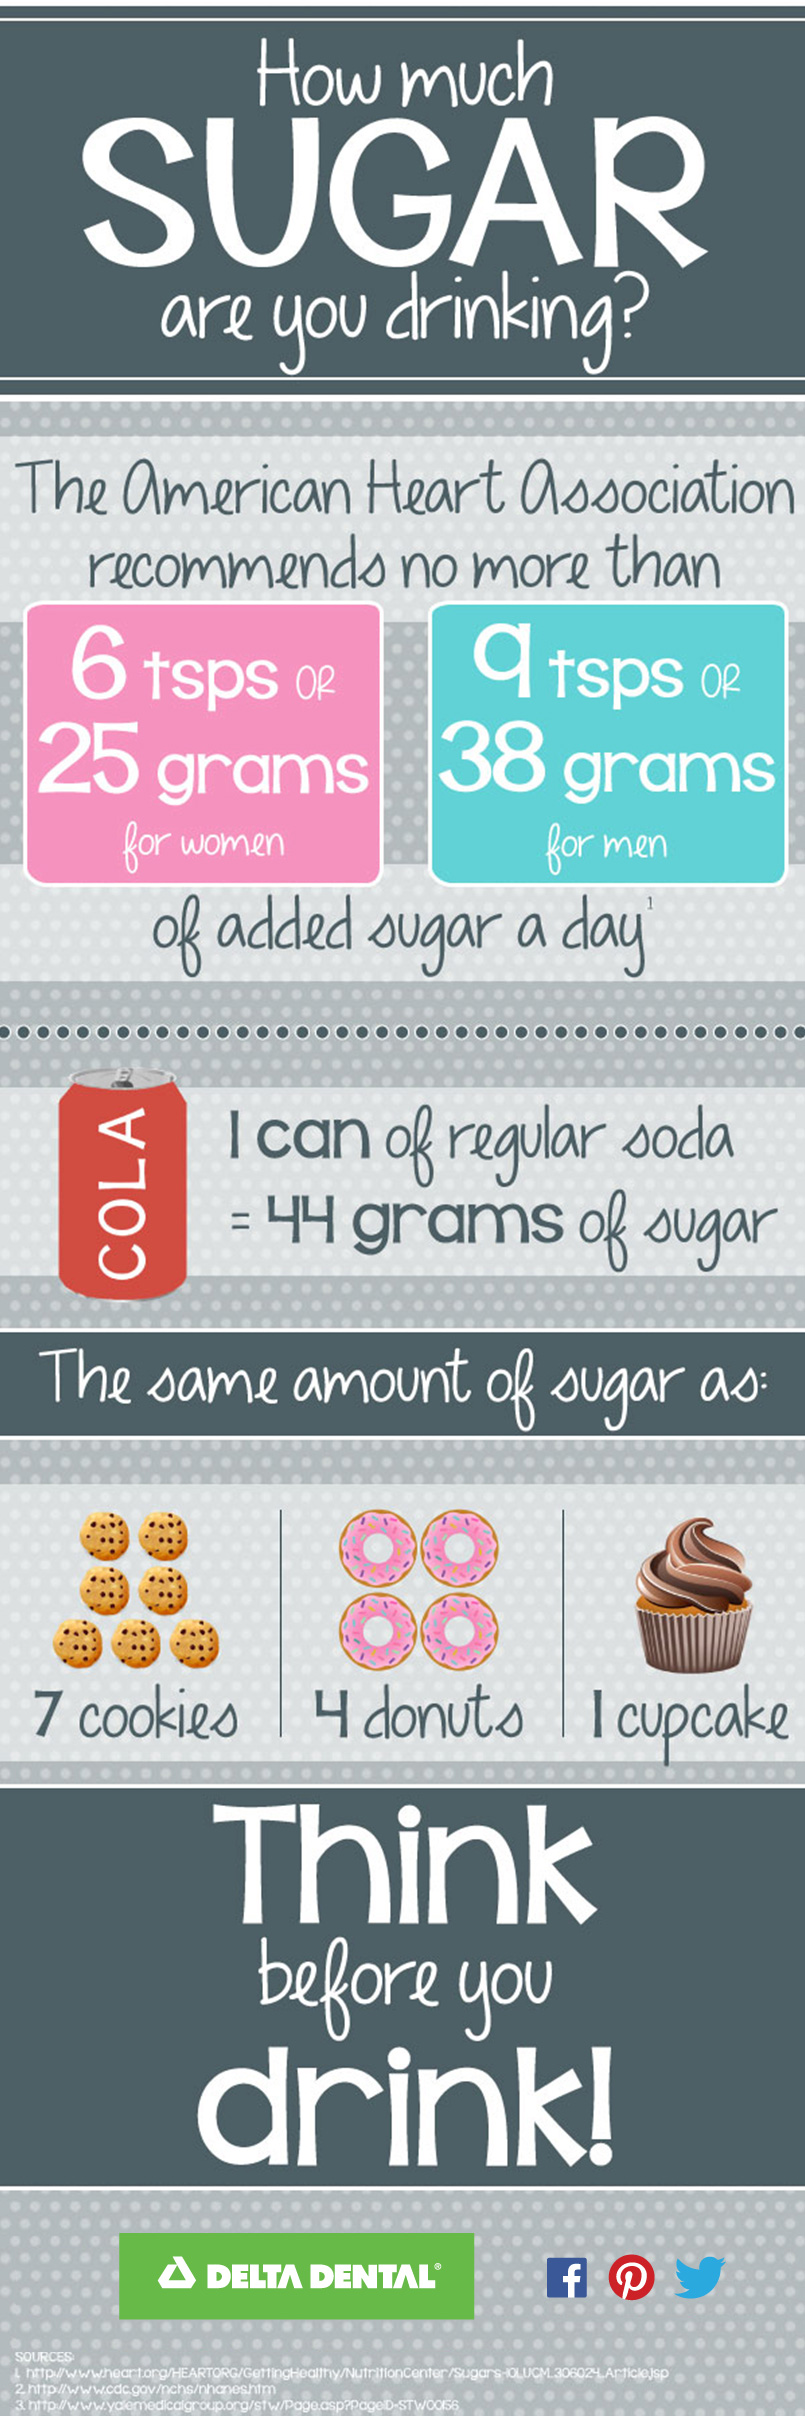 how-much-sugar.jpg